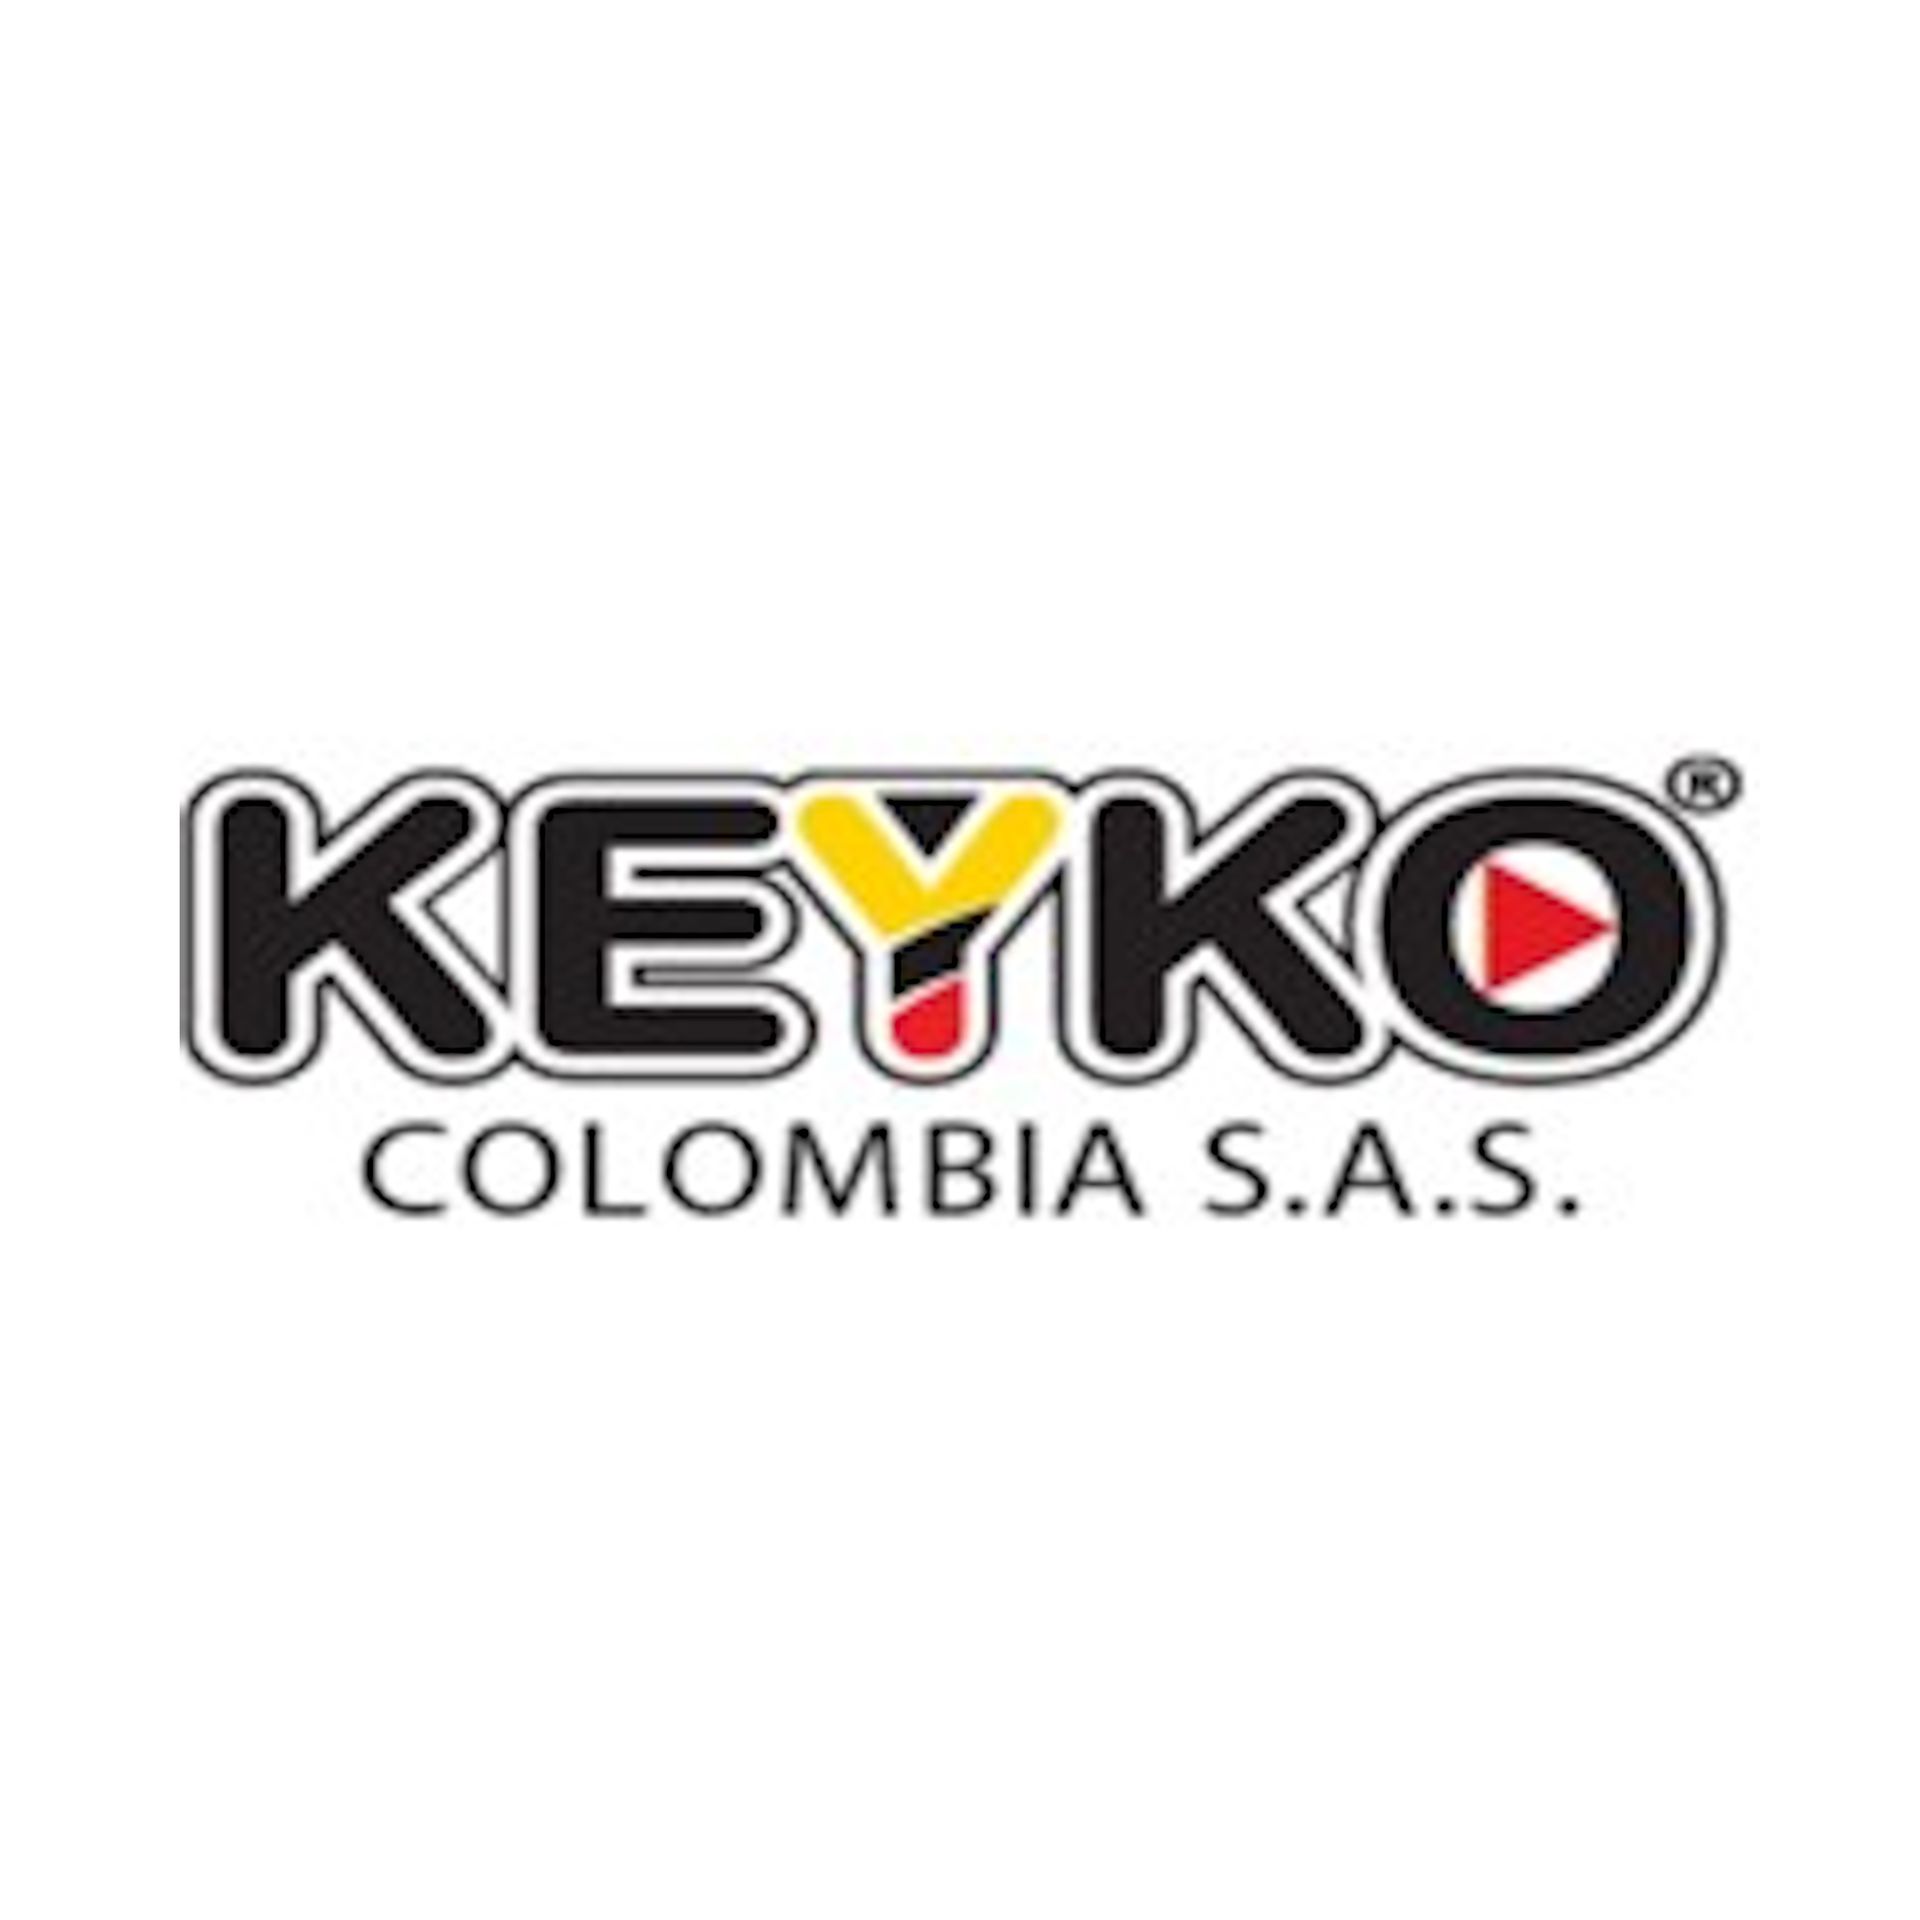 Keyko